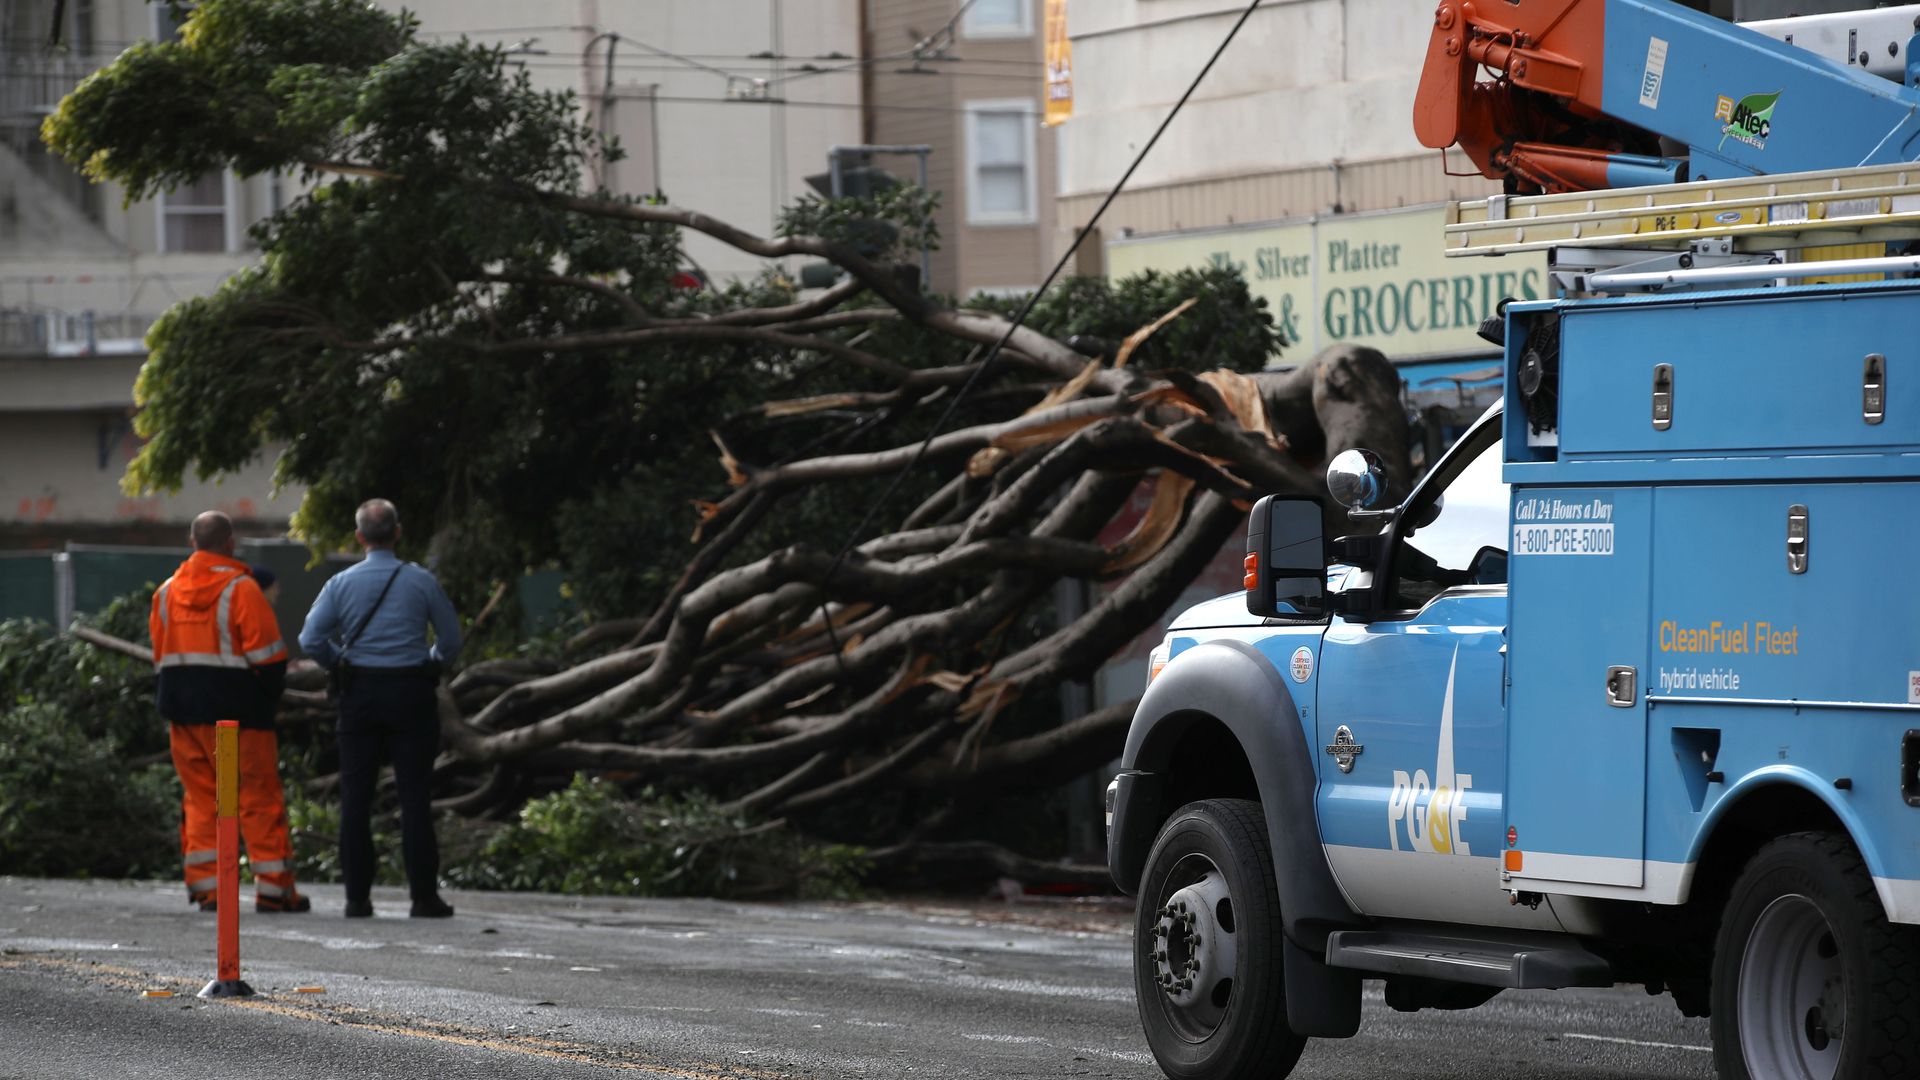 PG&E truck surveys damage from fallen tree